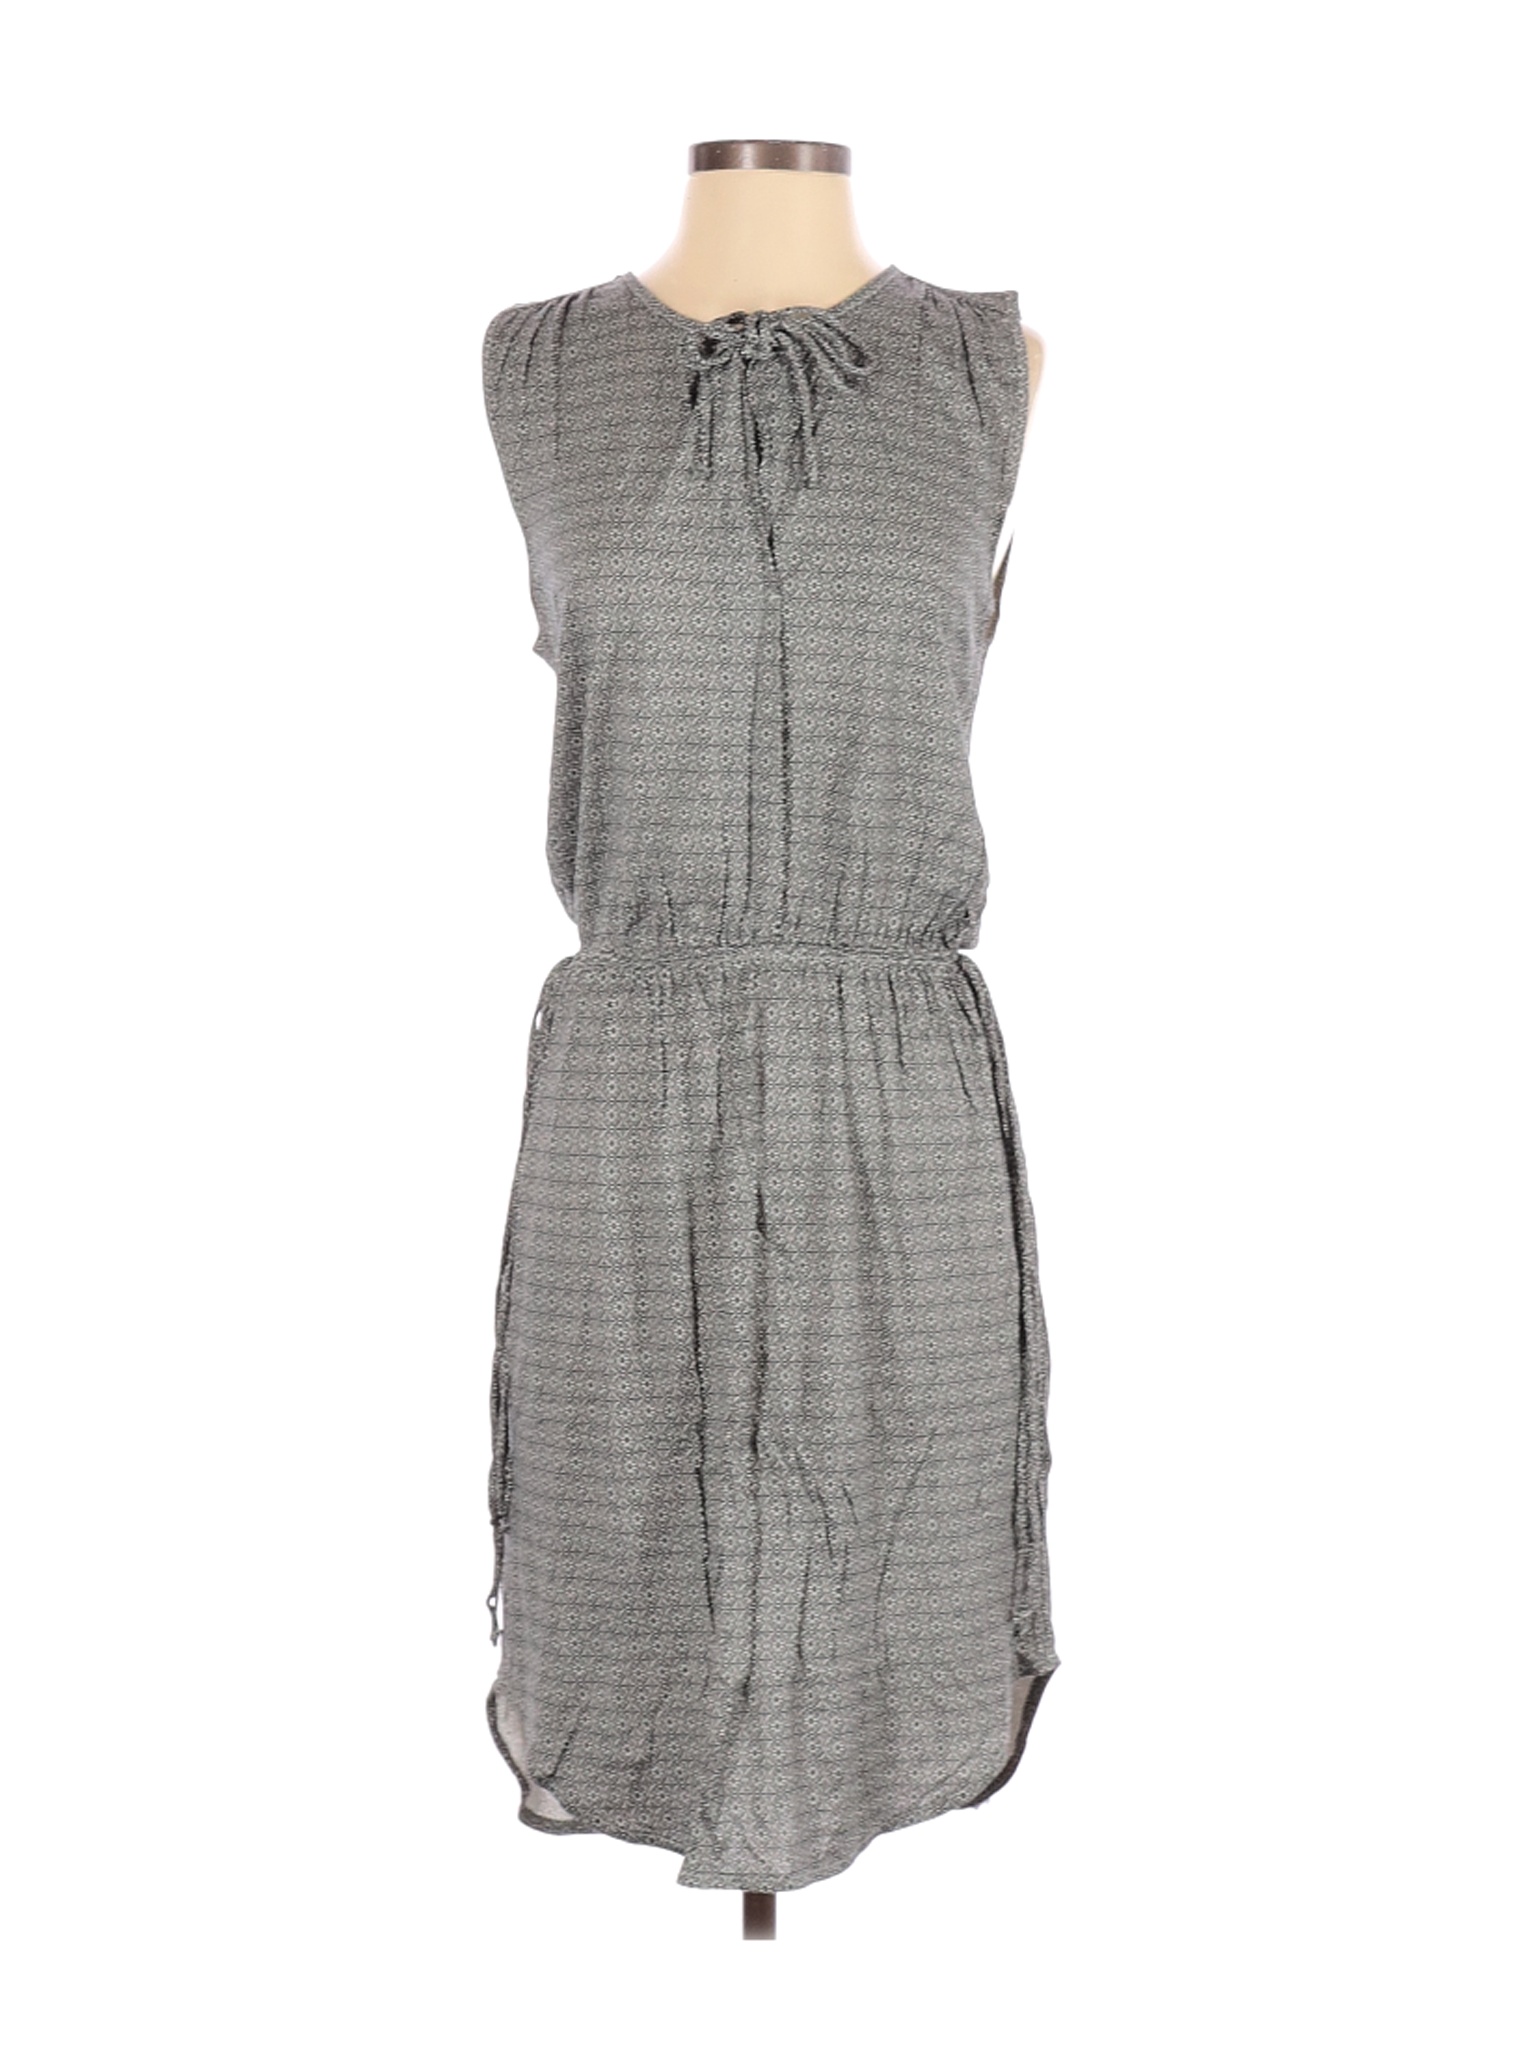 H&M Women Gray Casual Dress S | eBay